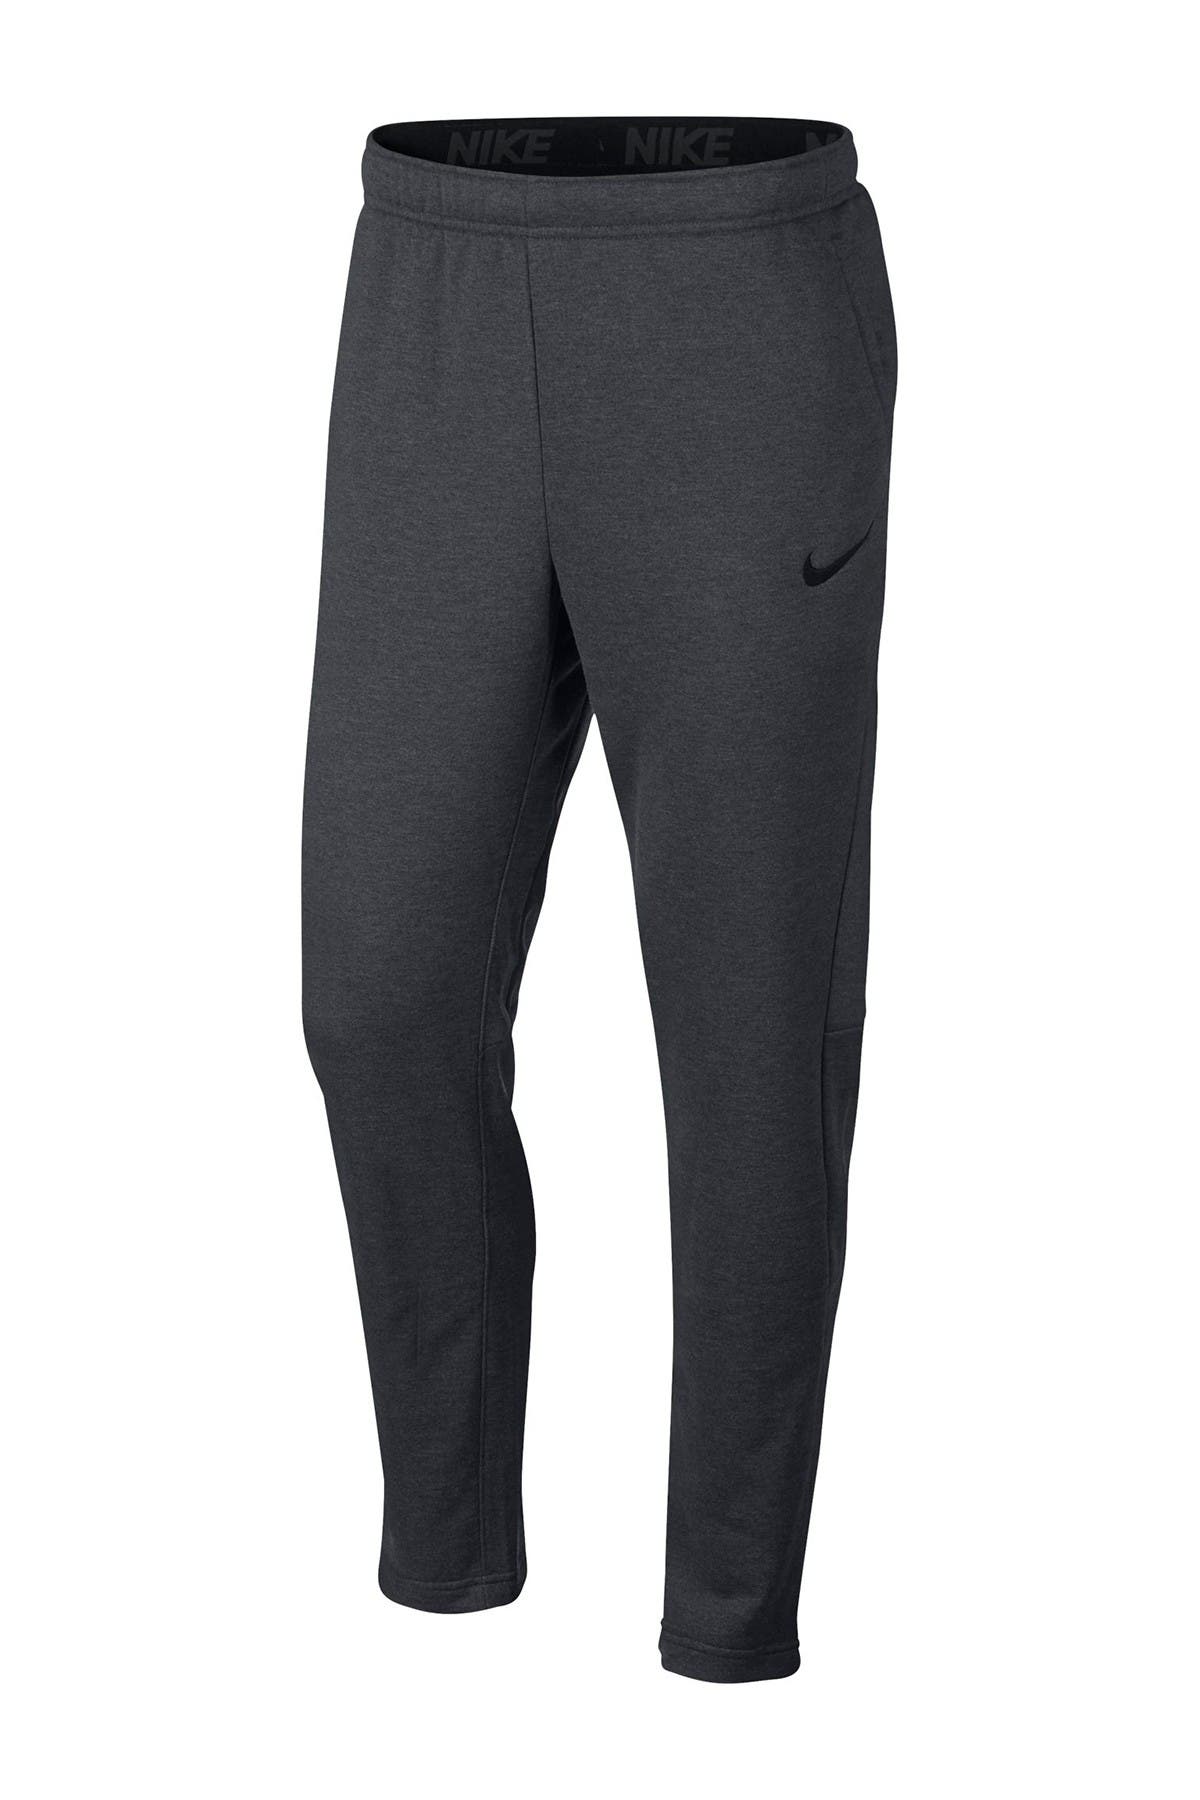 Nike | Dri-FIT Training Sweatpants 